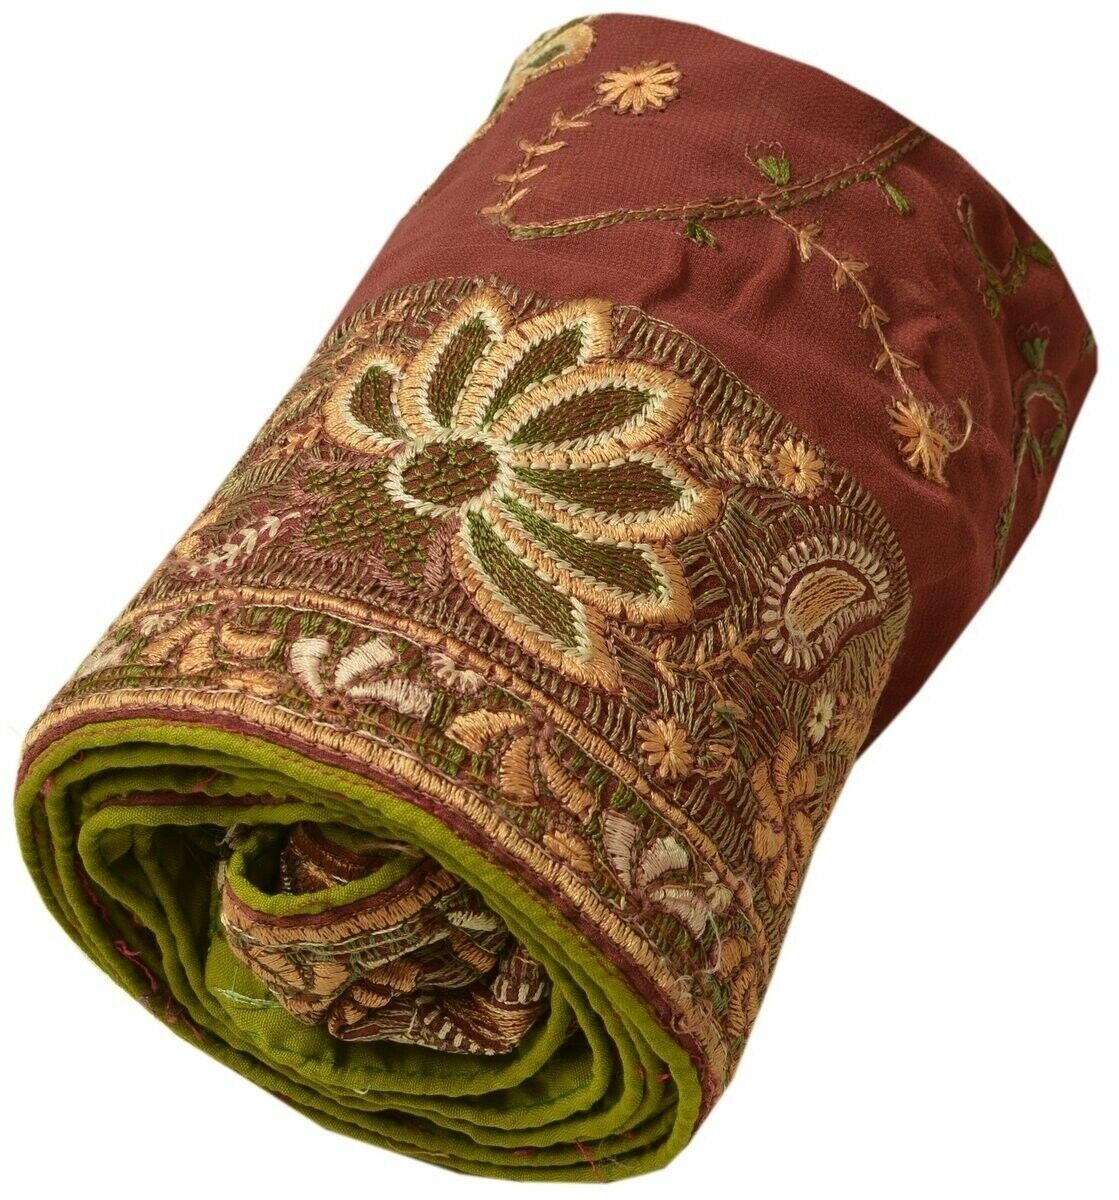 Vintage Sari Border Indian Craft Trim Embroidered Floral Maroon Ribbon Lace